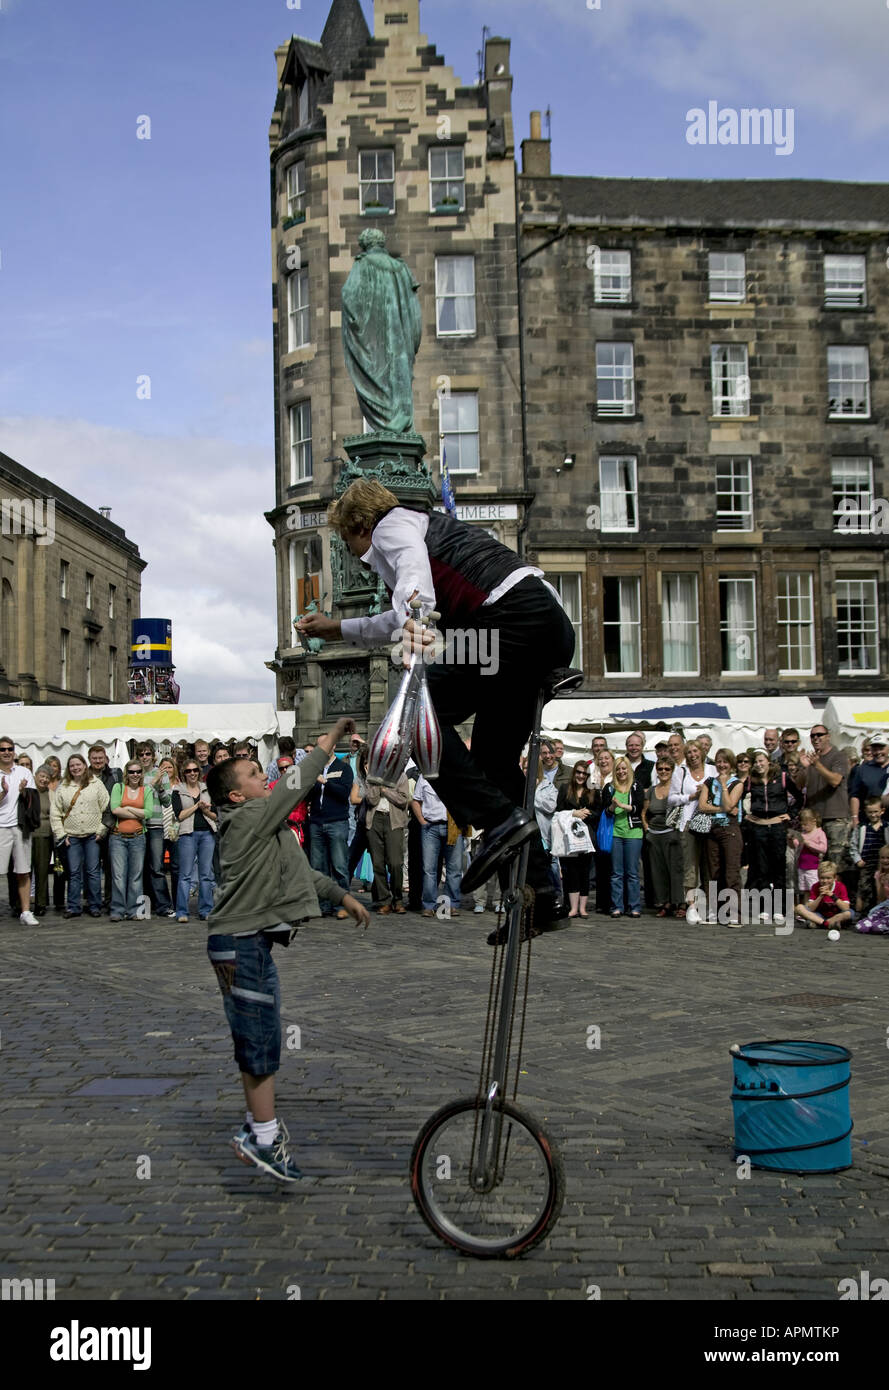 Edinburgh Fringe street performer on unicycle and young boy jumping for cash, Scotland UK Europe Stock Photo